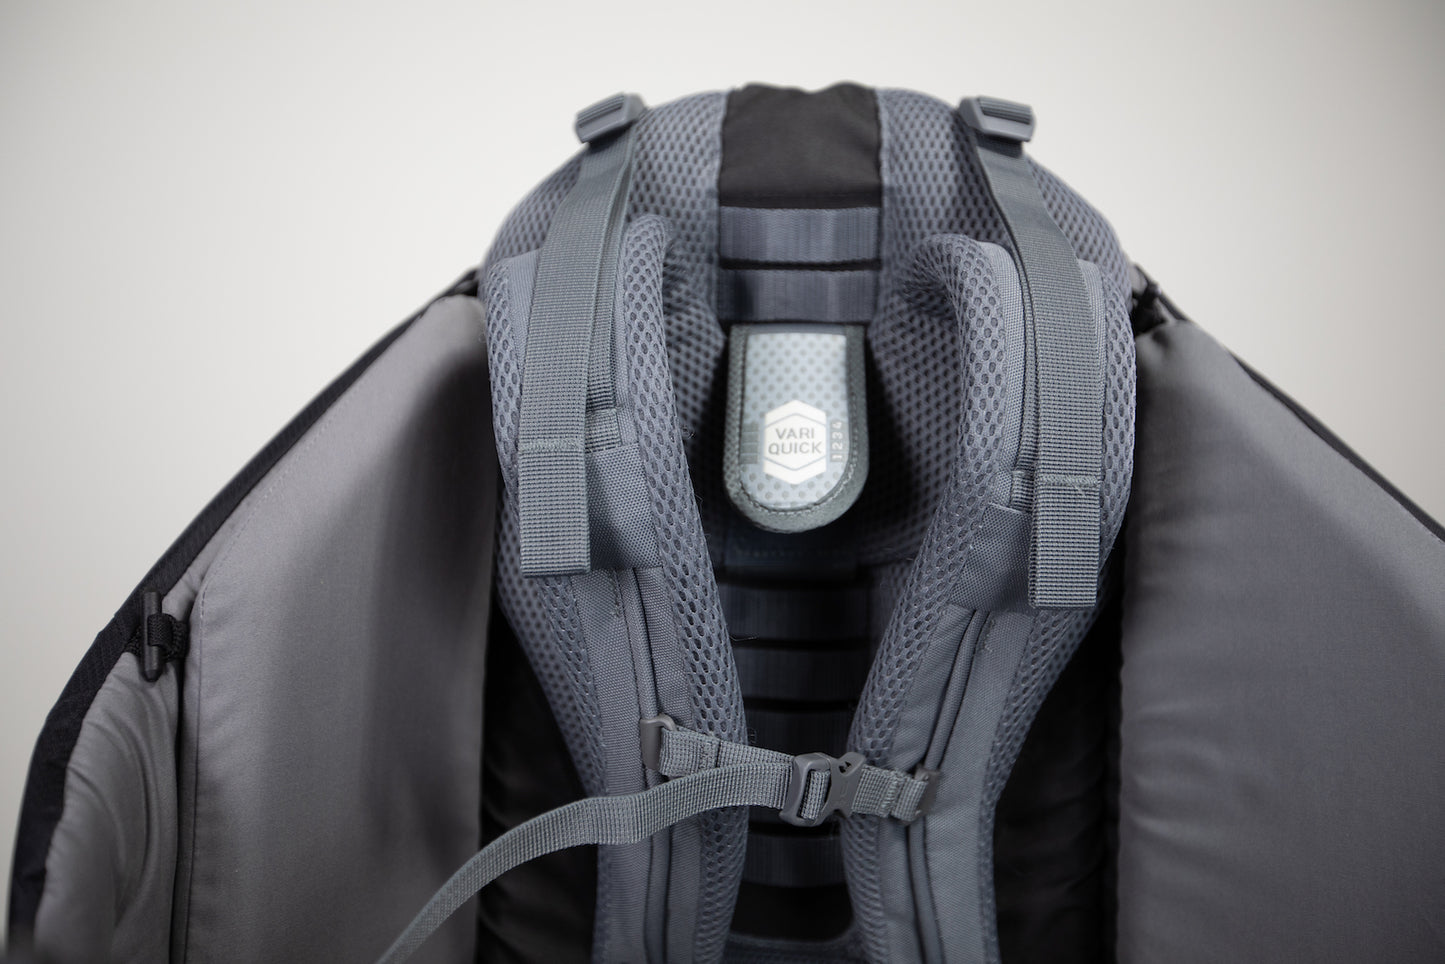 WCK Backpack 2.0